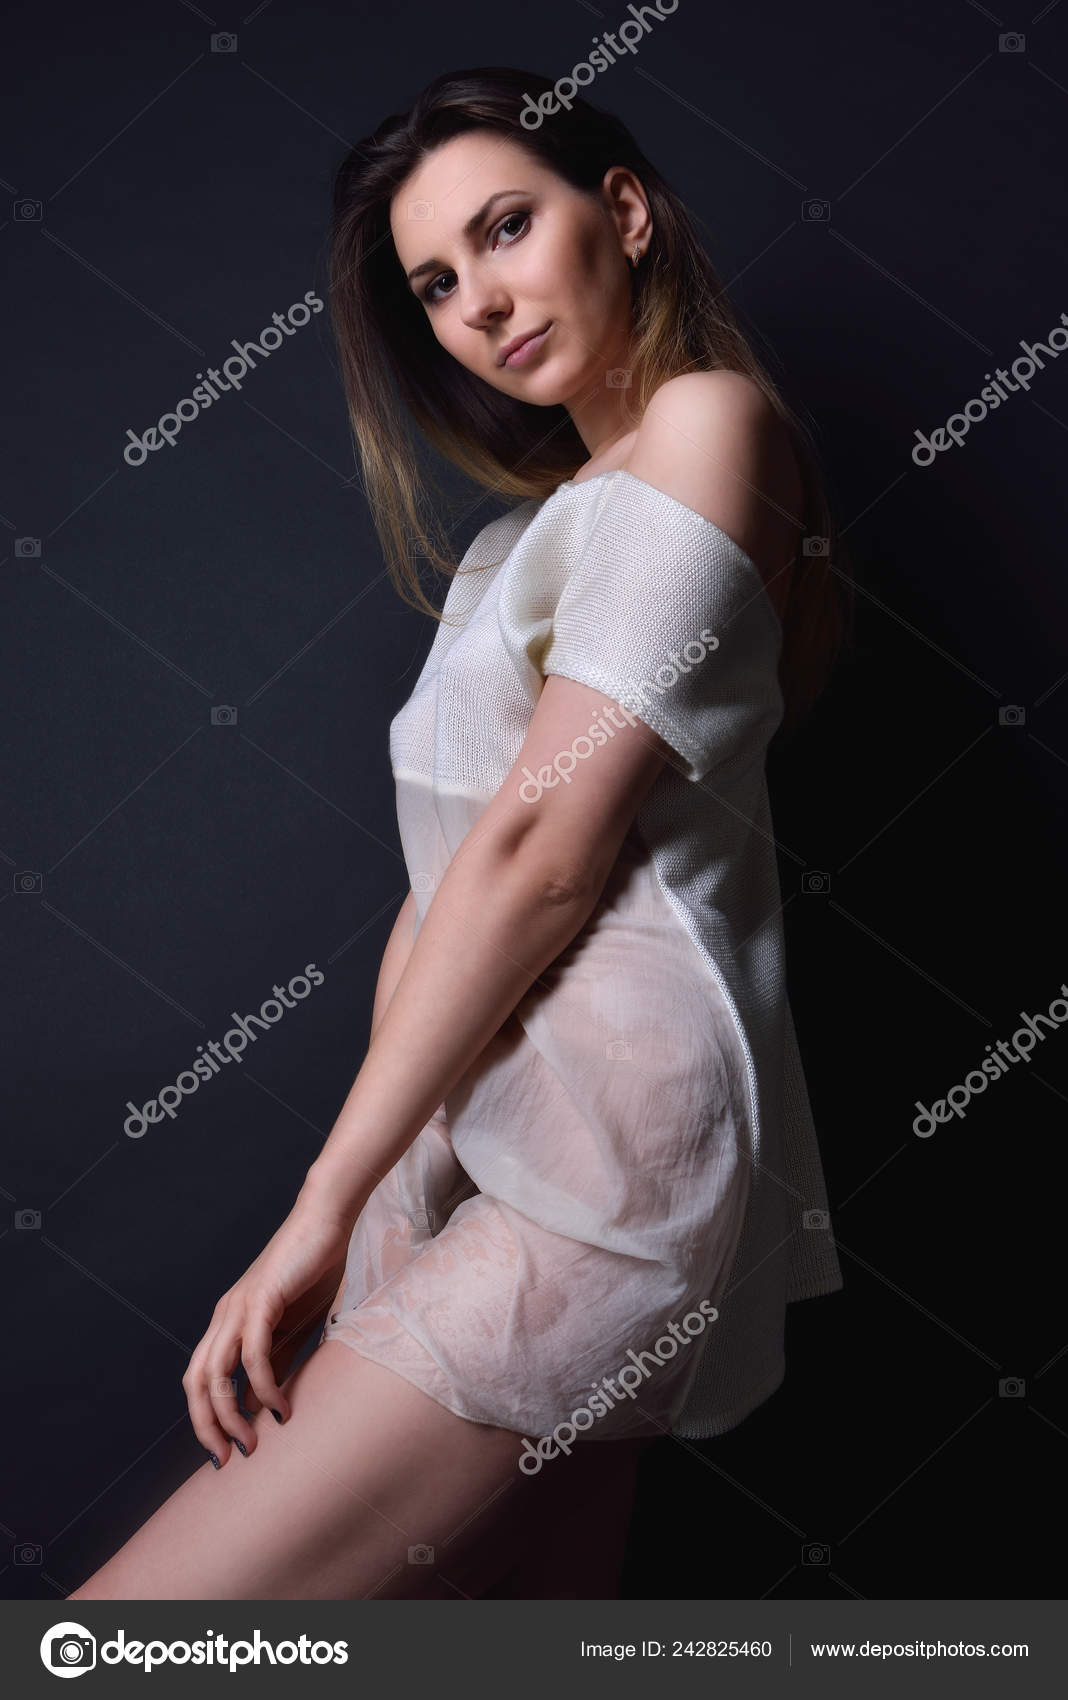 https://st4.depositphotos.com/1001977/24282/i/1600/depositphotos_242825[001-999]-stock-photo-portrait-beautiful-barefoot-woman-white.jpg